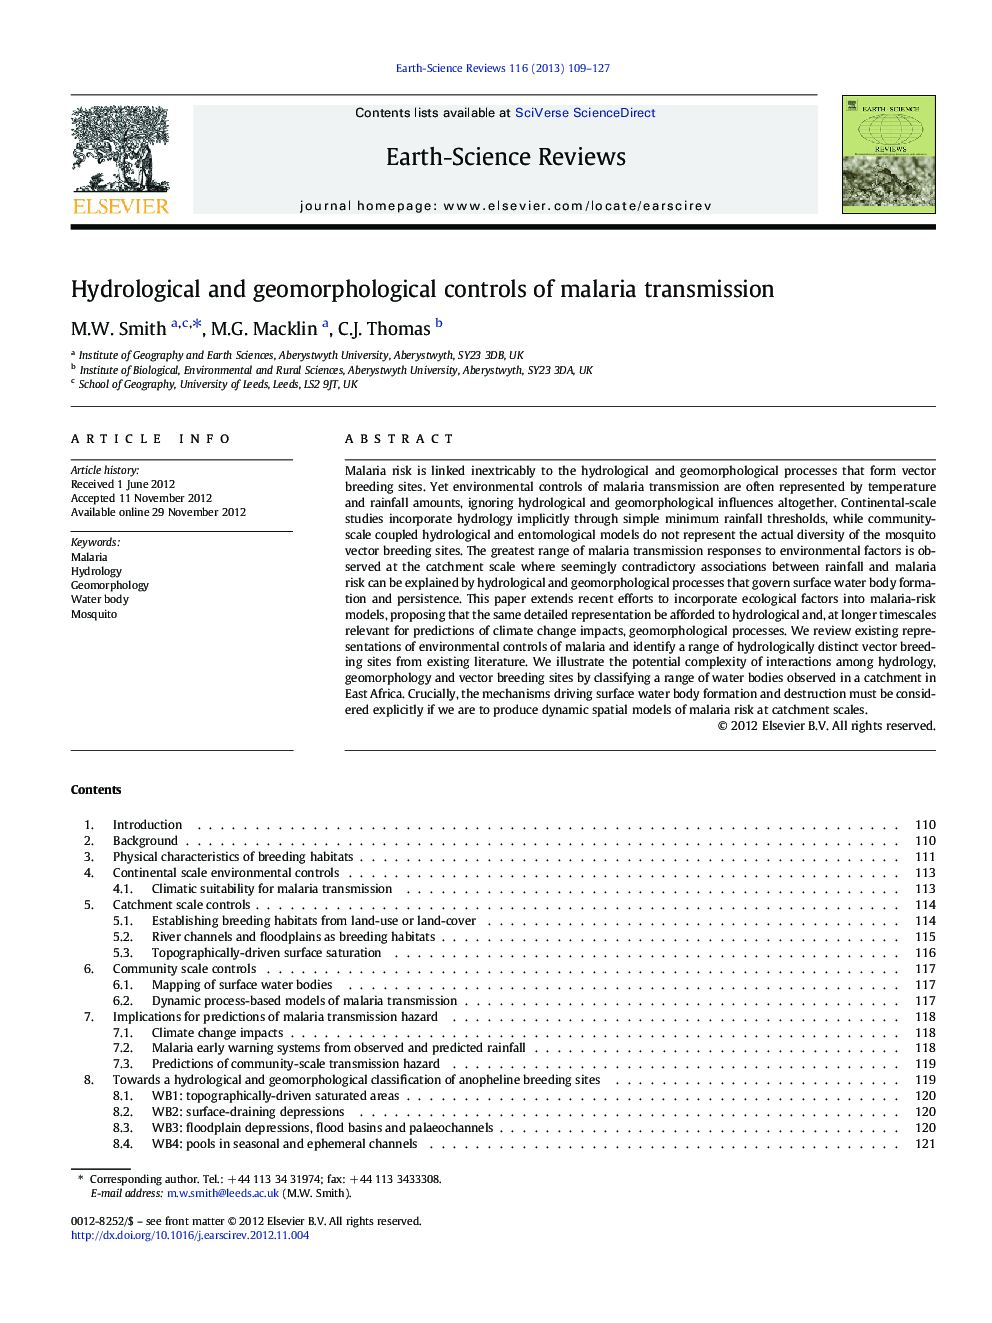 Hydrological and geomorphological controls of malaria transmission